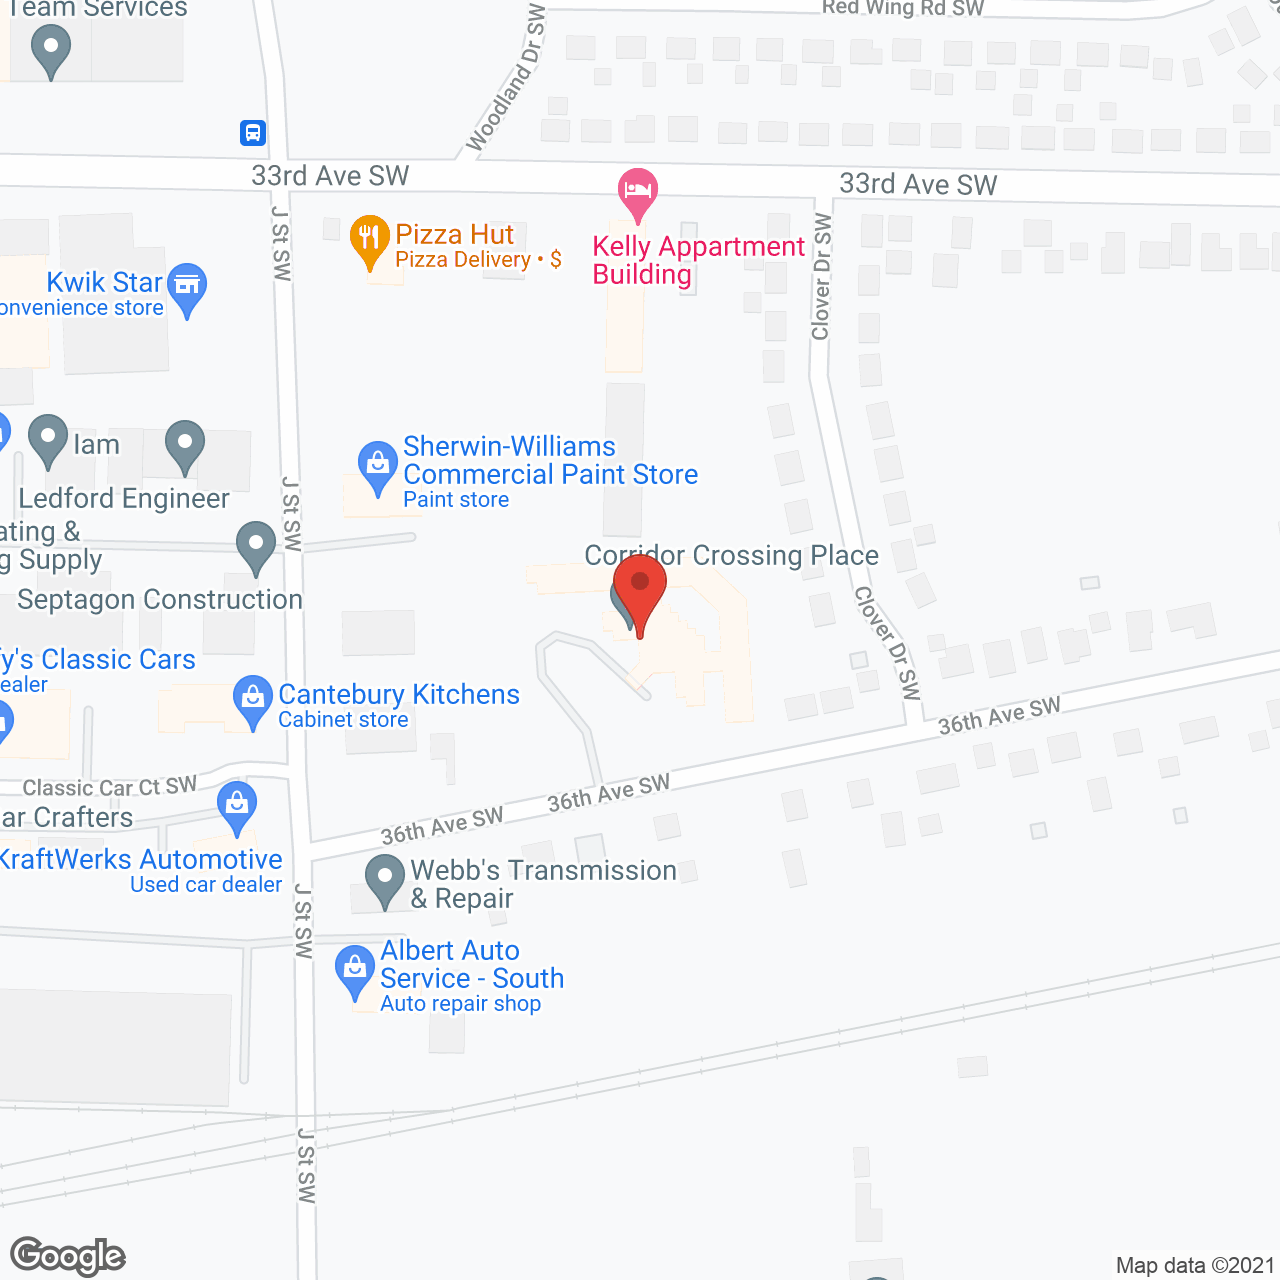 Corridor Crossing Place in google map